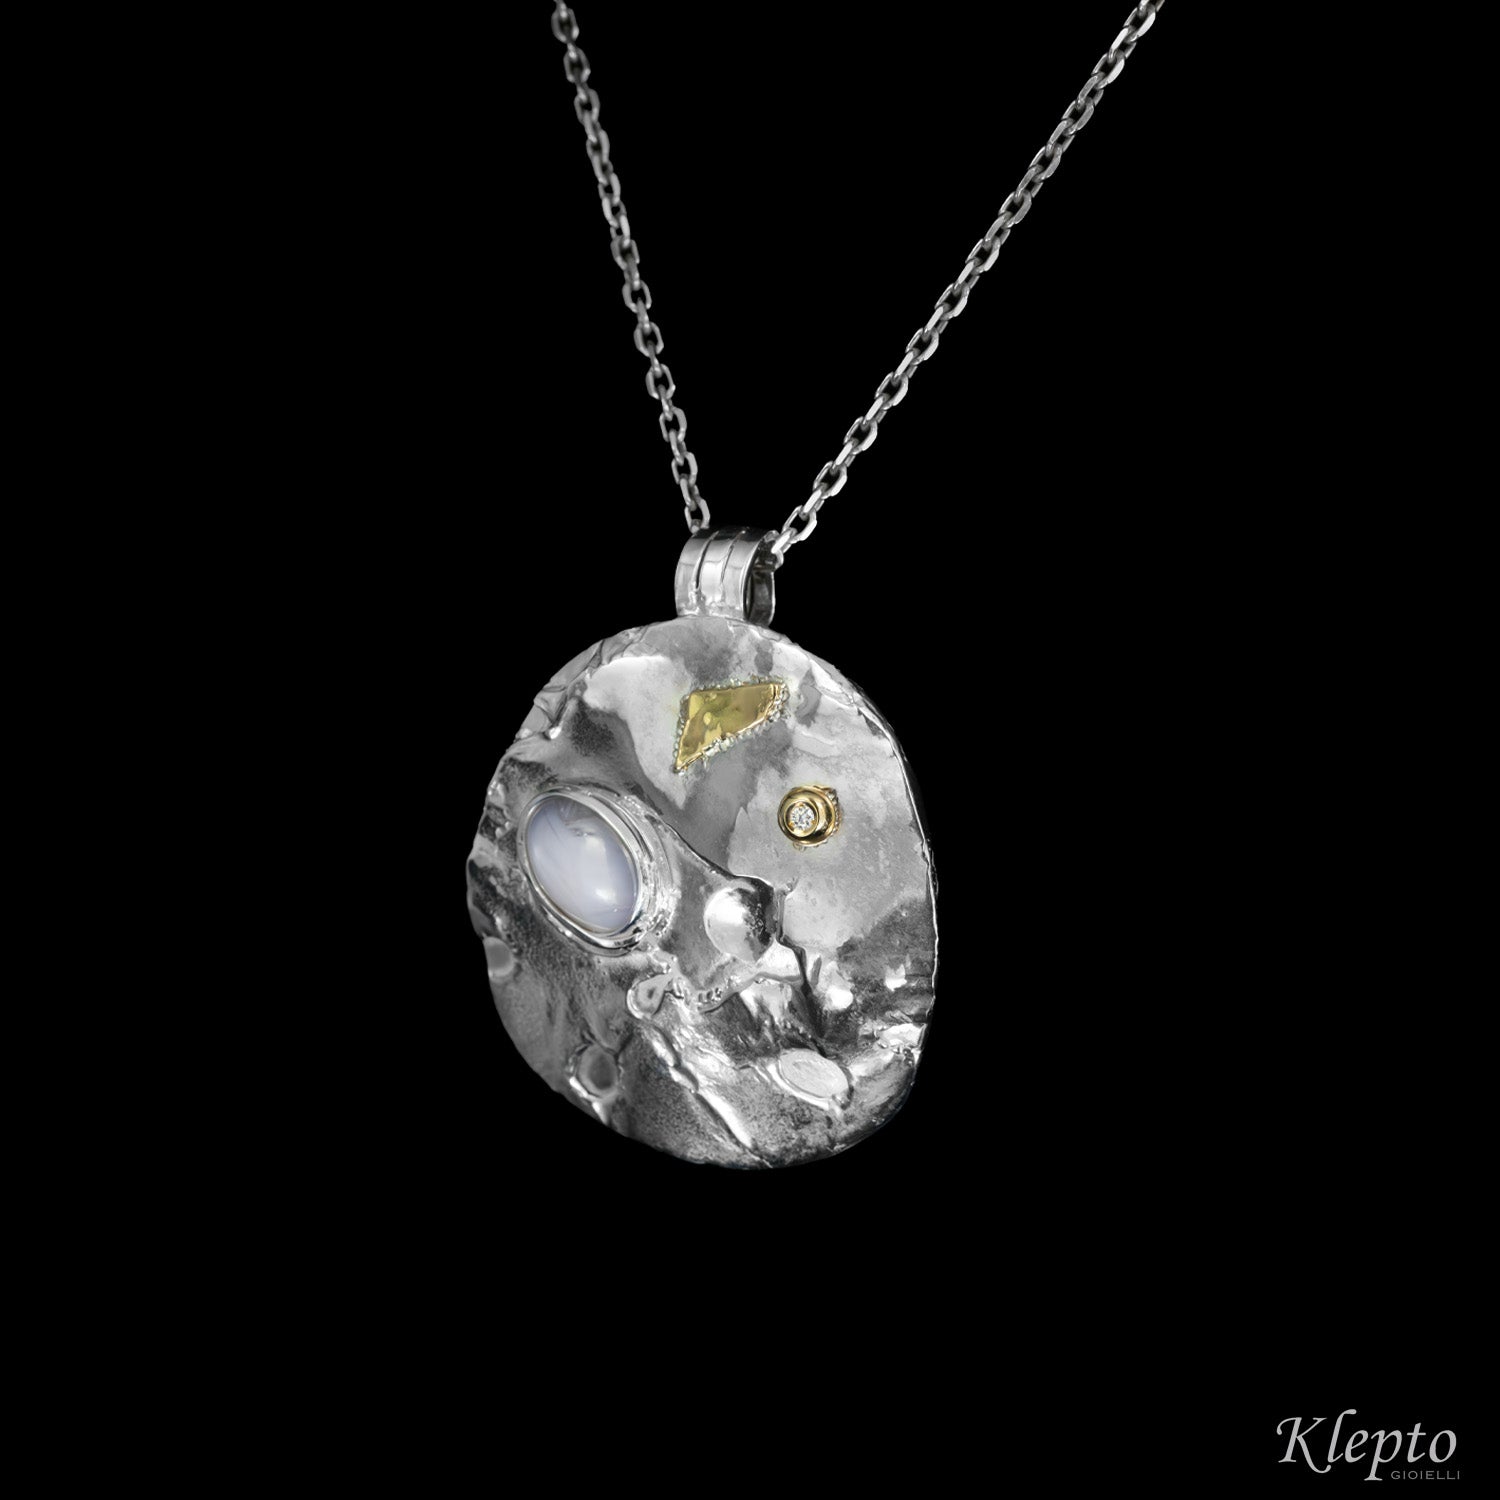 "Supernova" Silnova® Silver Pendant with Asteria Sapphire, Diamond and yellow gold details